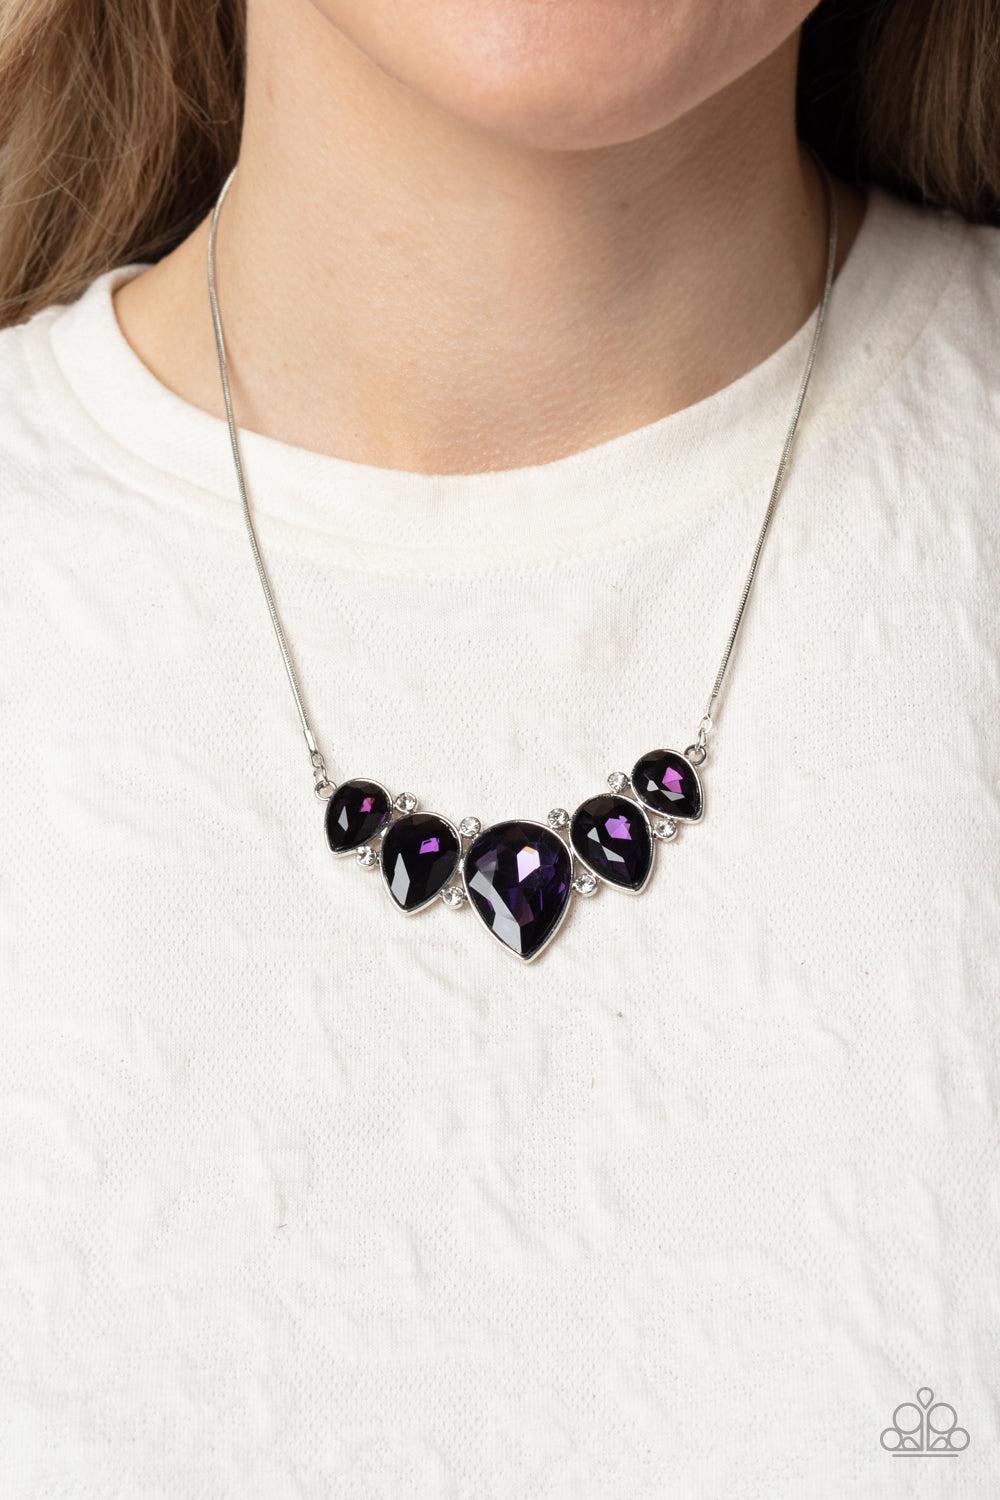 Regally Refined Purple Rhinestone Necklace - Paparazzi Accessories- lightbox - CarasShop.com - $5 Jewelry by Cara Jewels